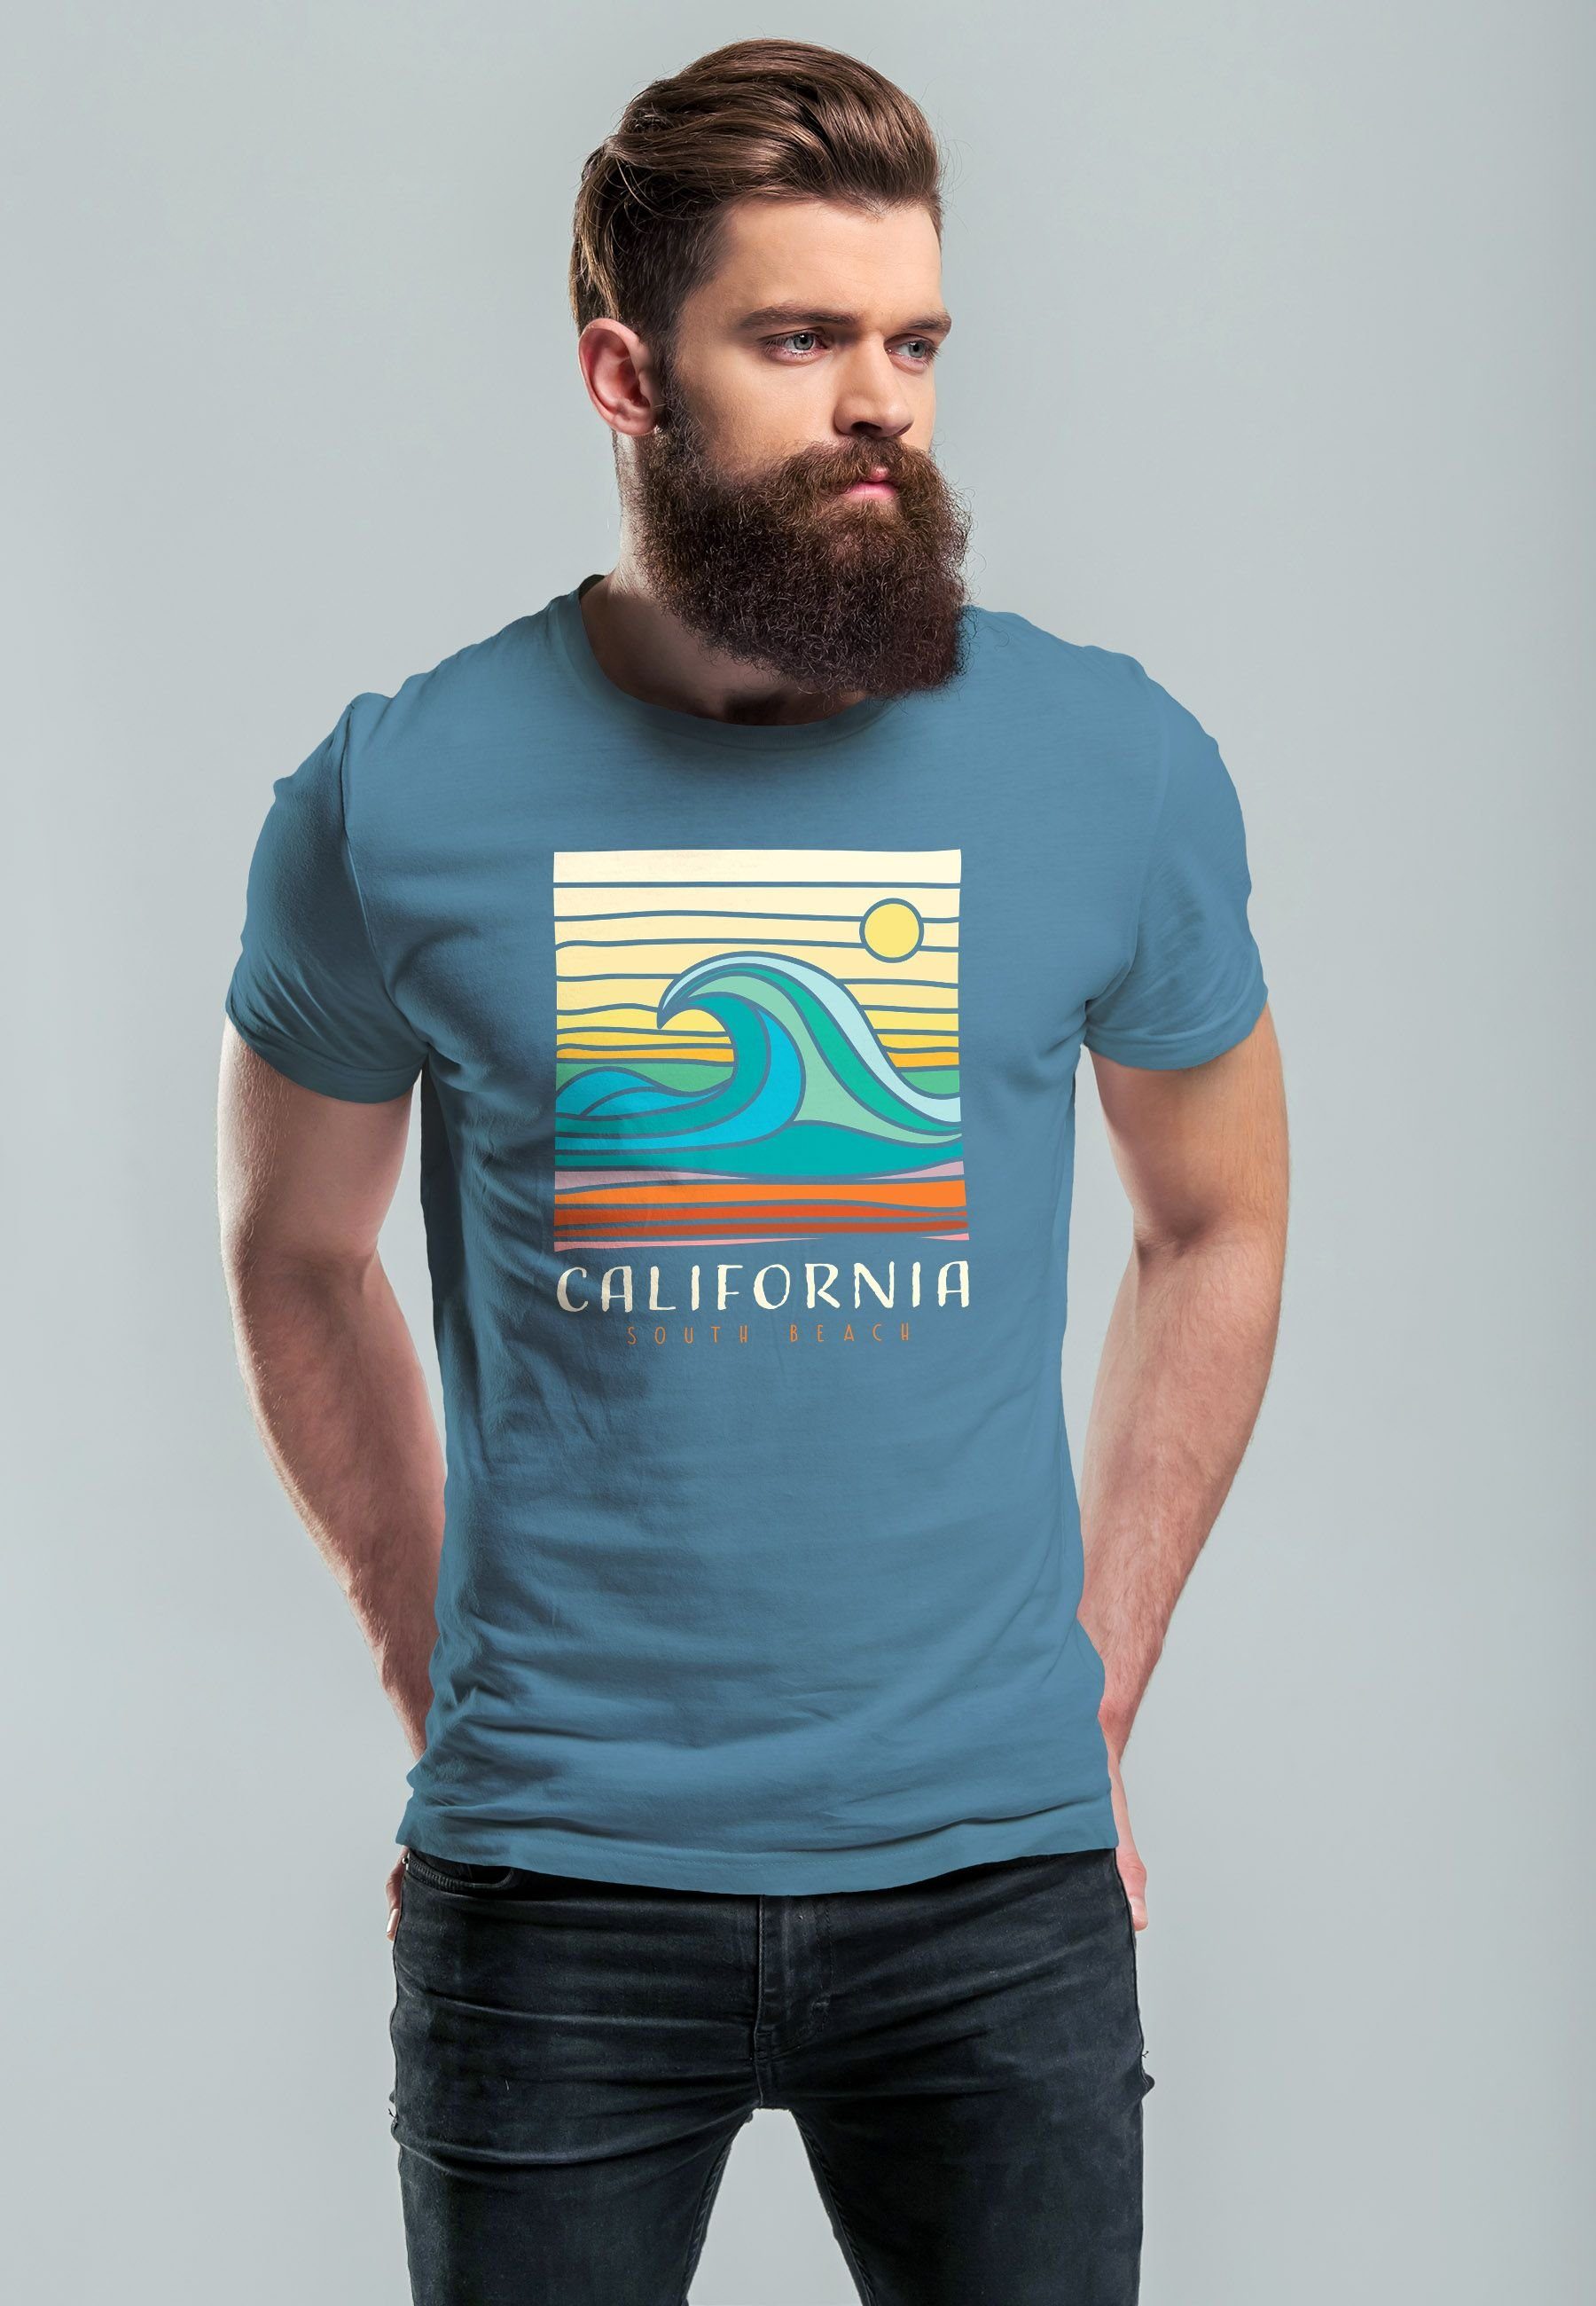 Neverless Print-Shirt Herren Welle mit Wave T-Shirt Beach Aufdruc stone Surfing blue Print California South Print